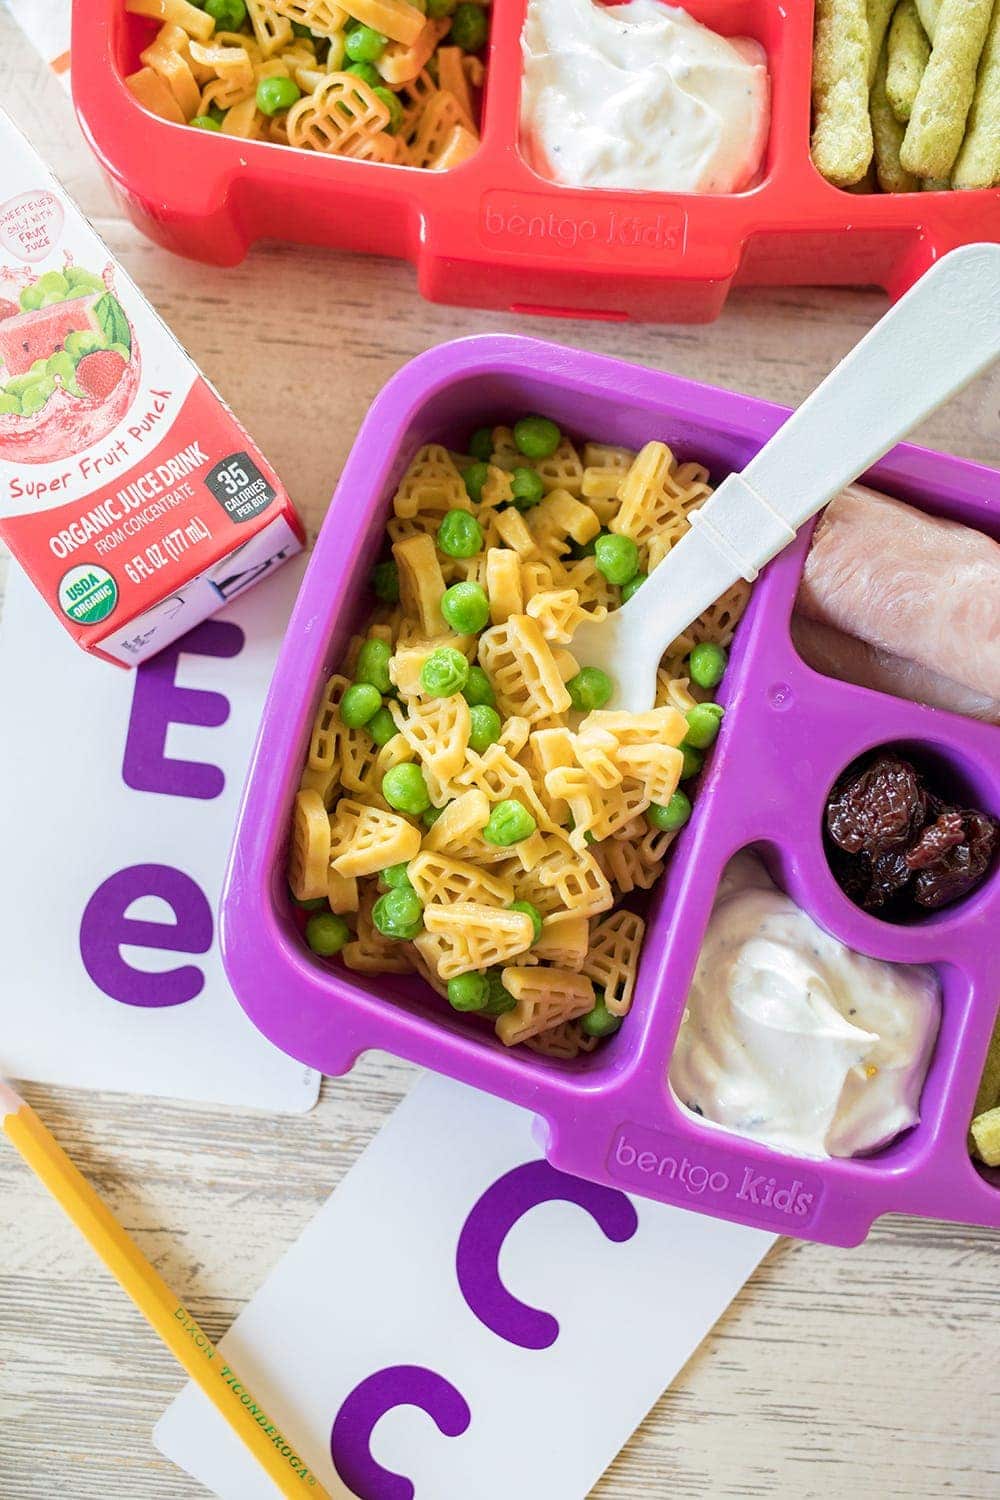 5 Bento Box School Lunches